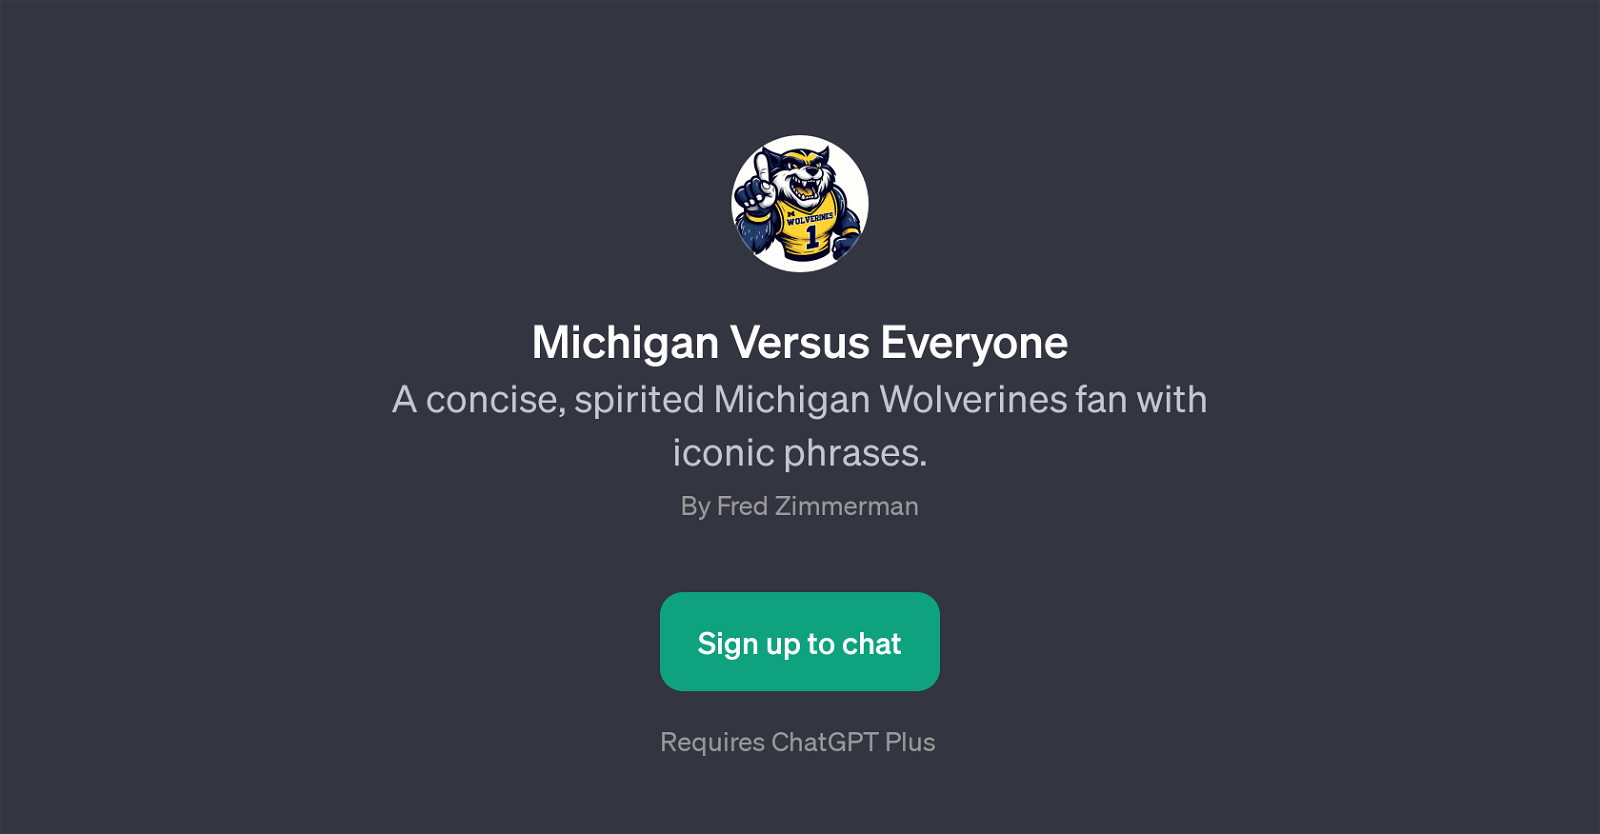 Michigan Versus Everyone website